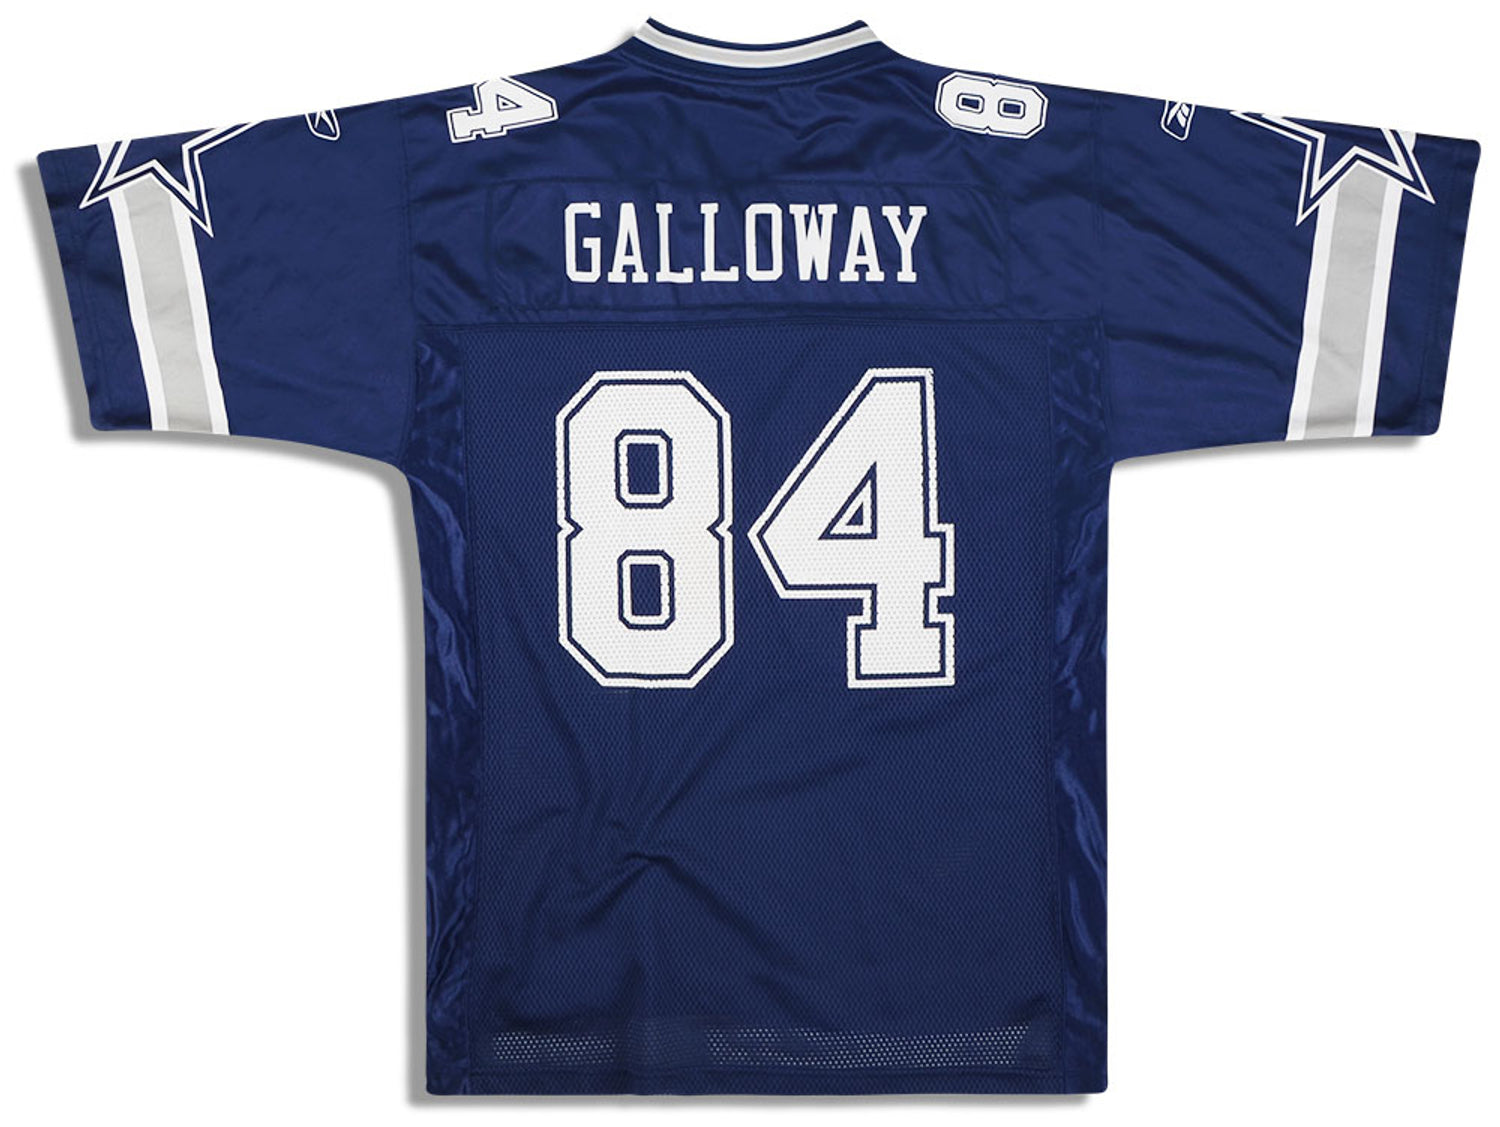 2003 DALLAS COWBOYS GALLOWAY #84 REEBOK ON FIELD JERSEY (HOME) XL